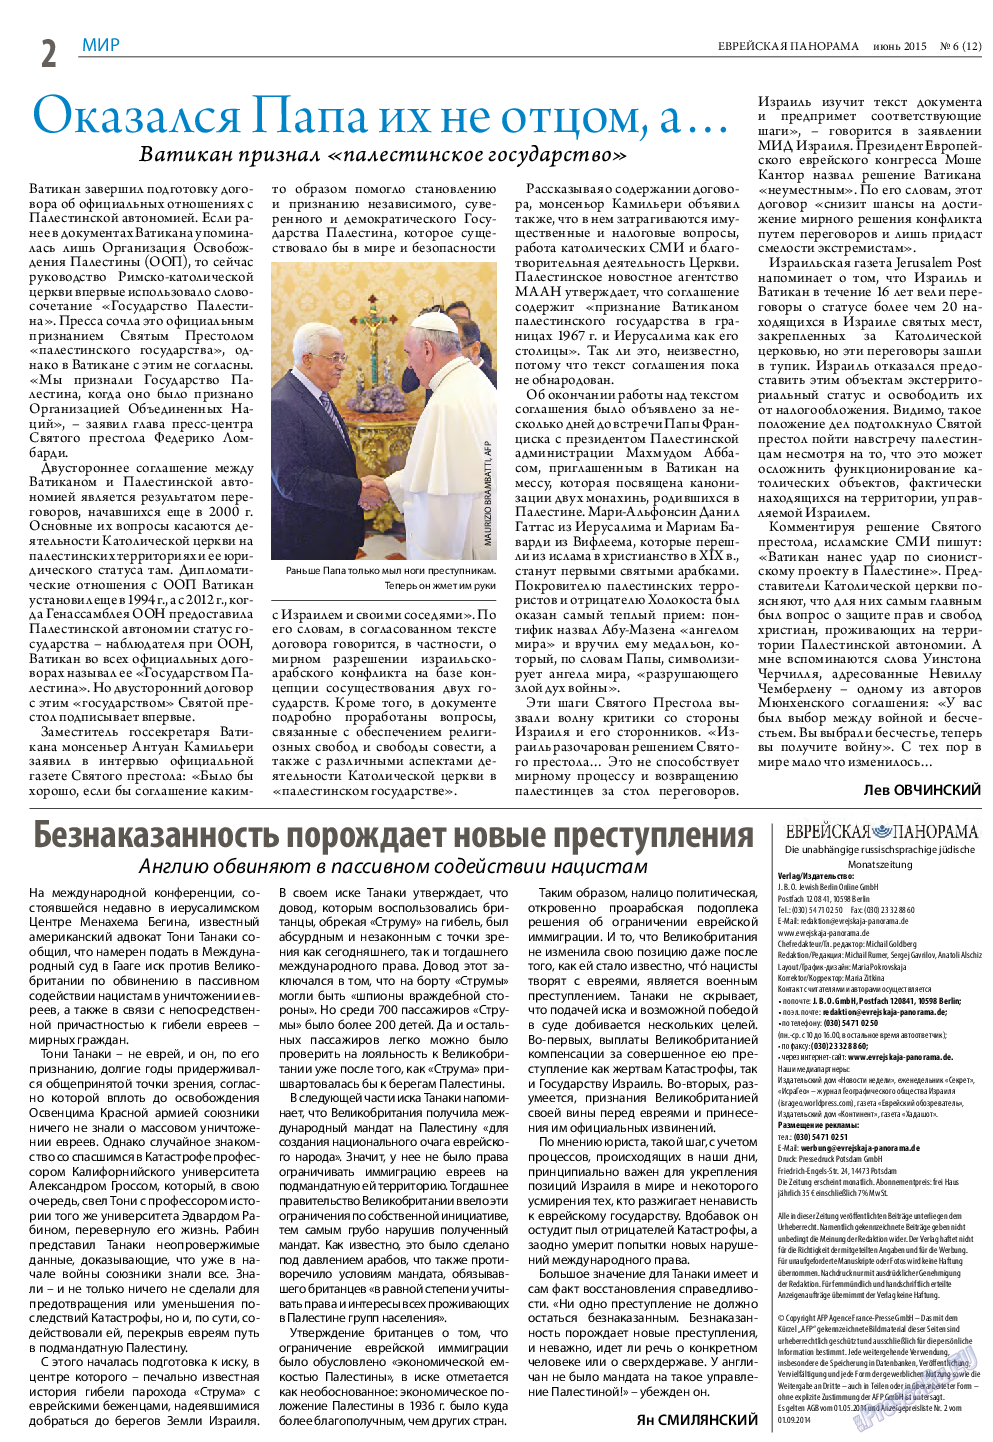 Еврейская панорама, газета. 2015 №6 стр.2